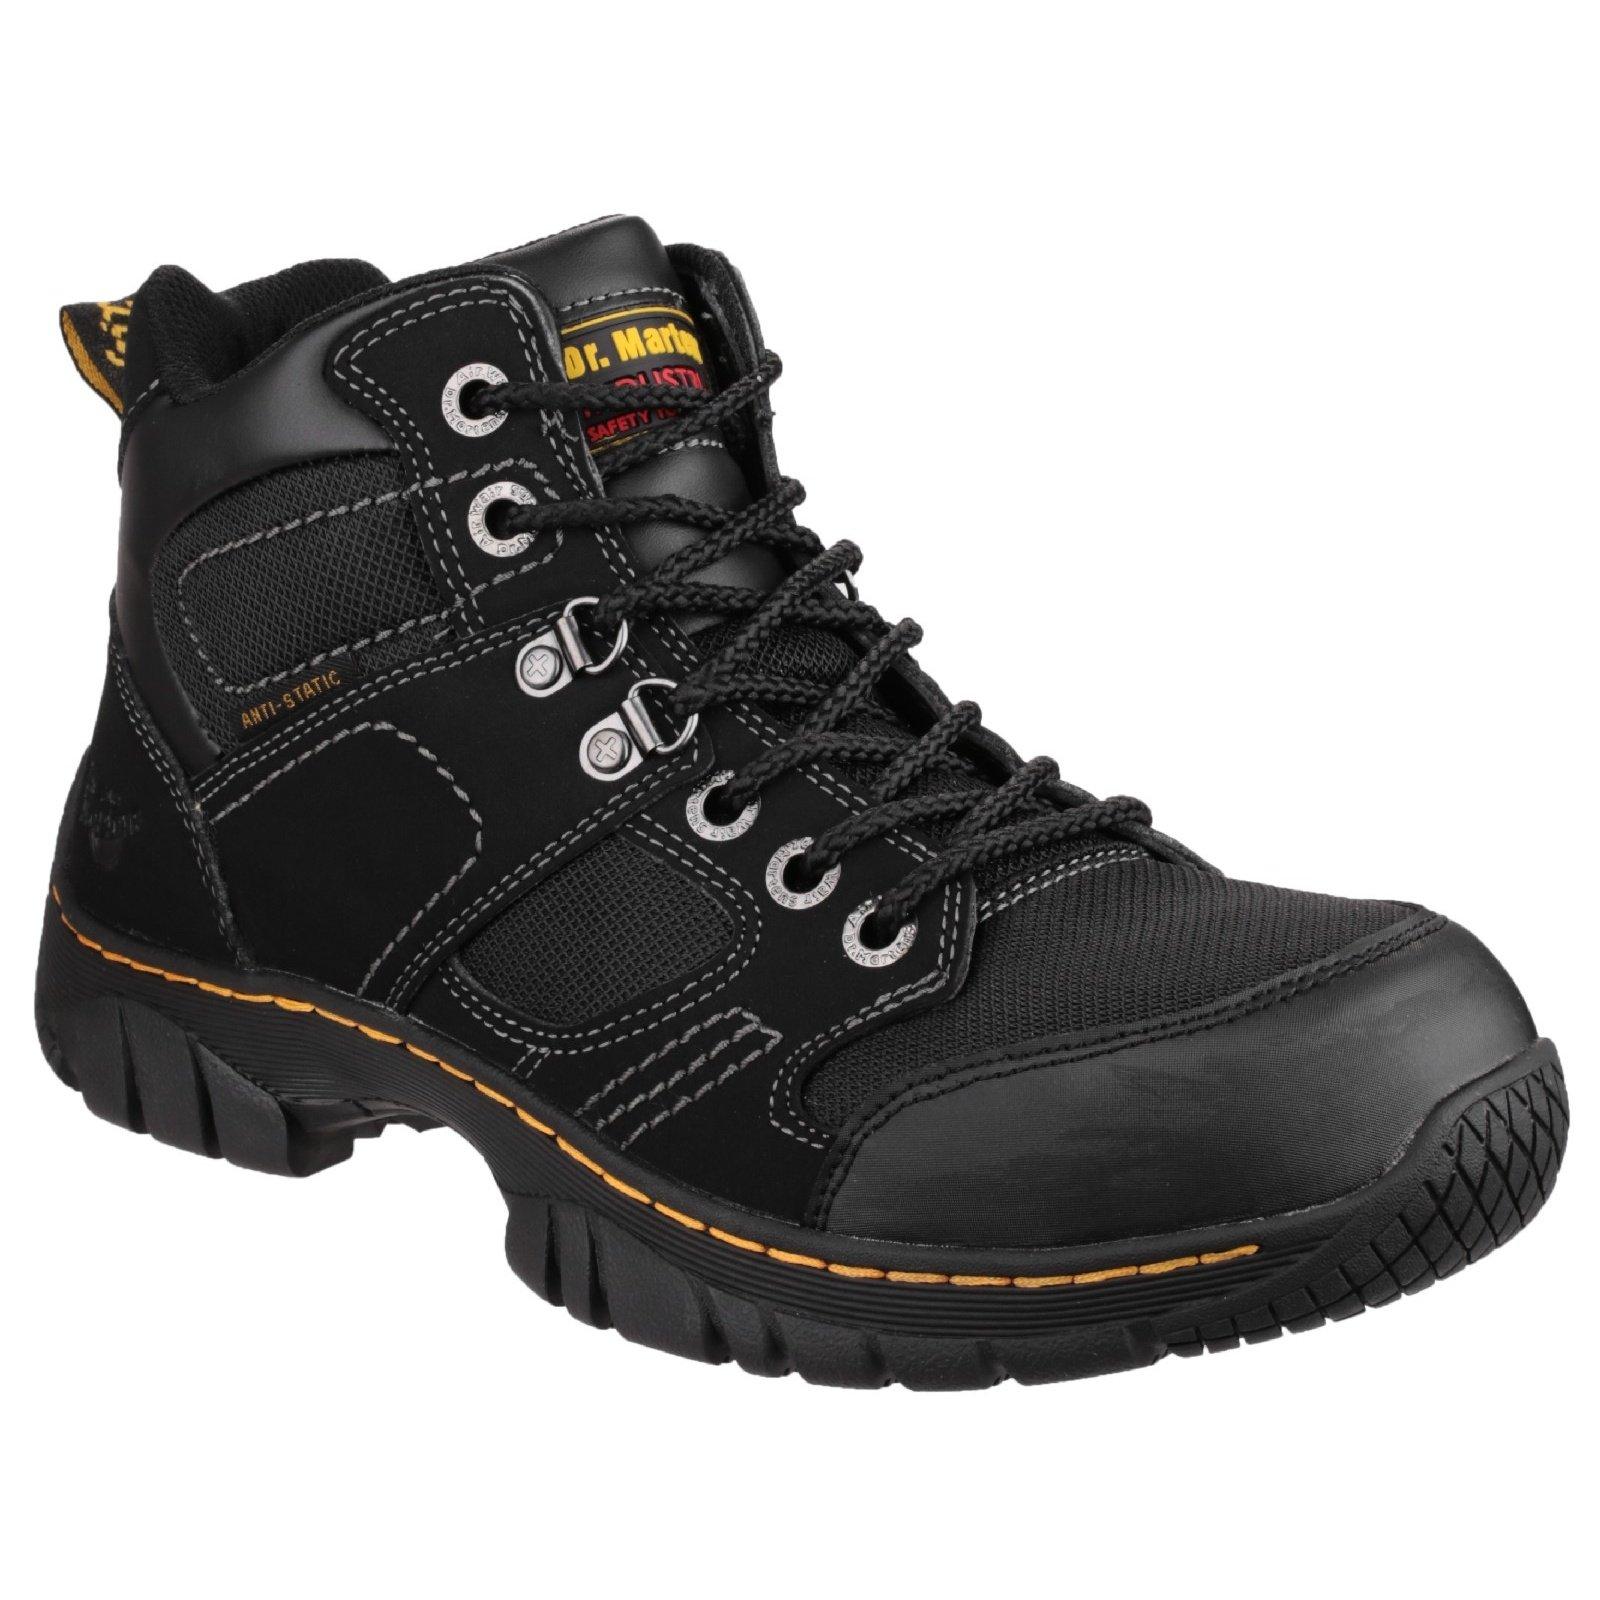 Dr. Martens Rubber Benham Safety Boots Black Size Uk 9 Eu 43 for Men - Lyst